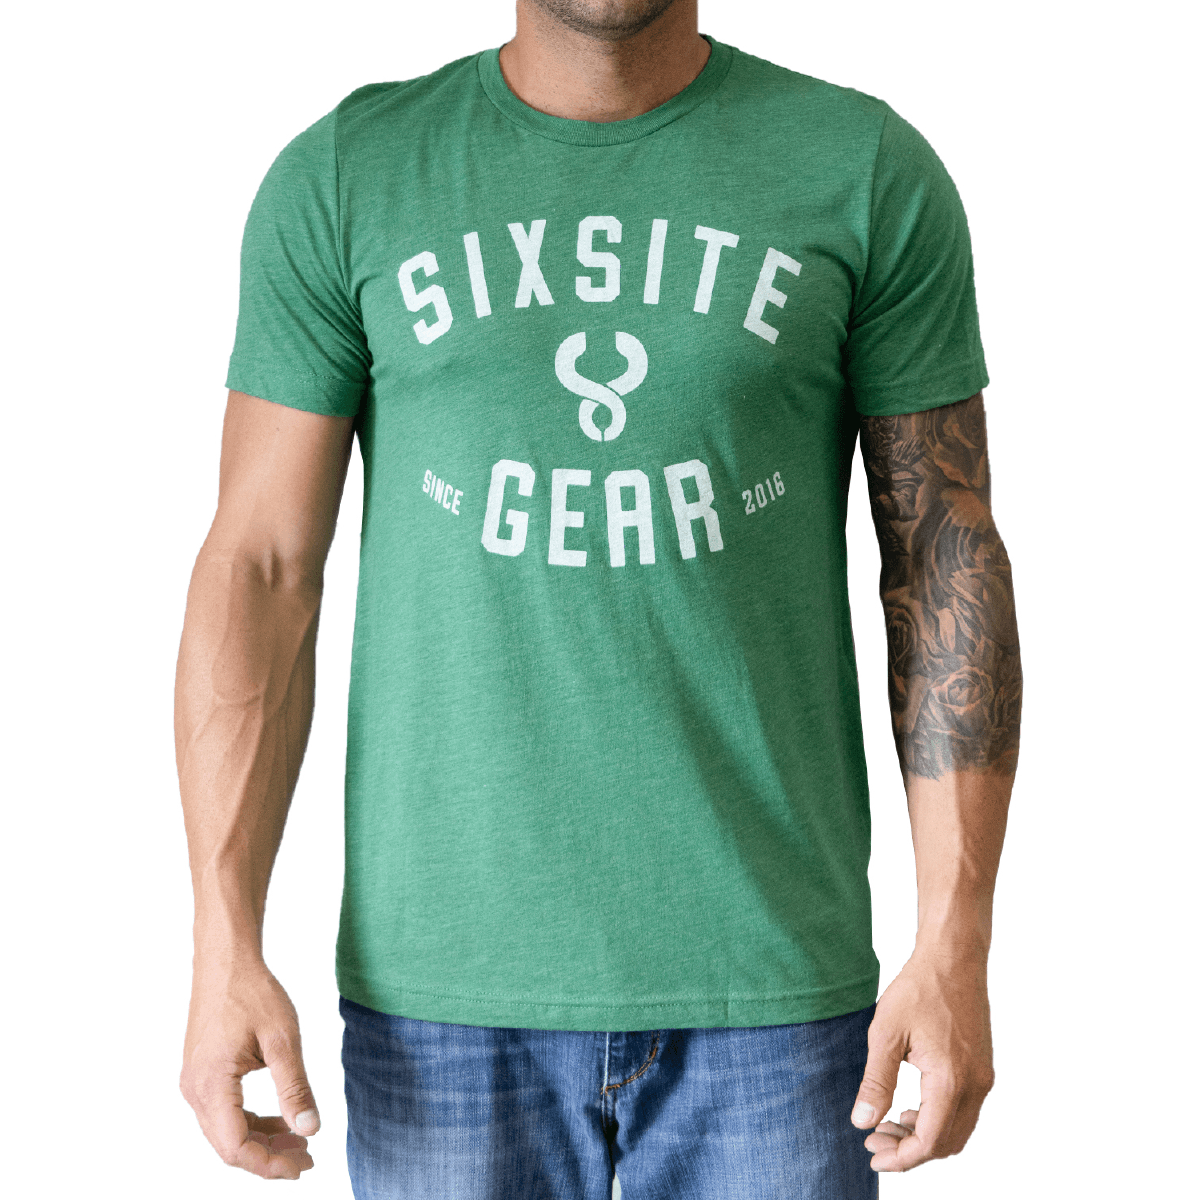 Classic SIXSITE T-Shirt - Green